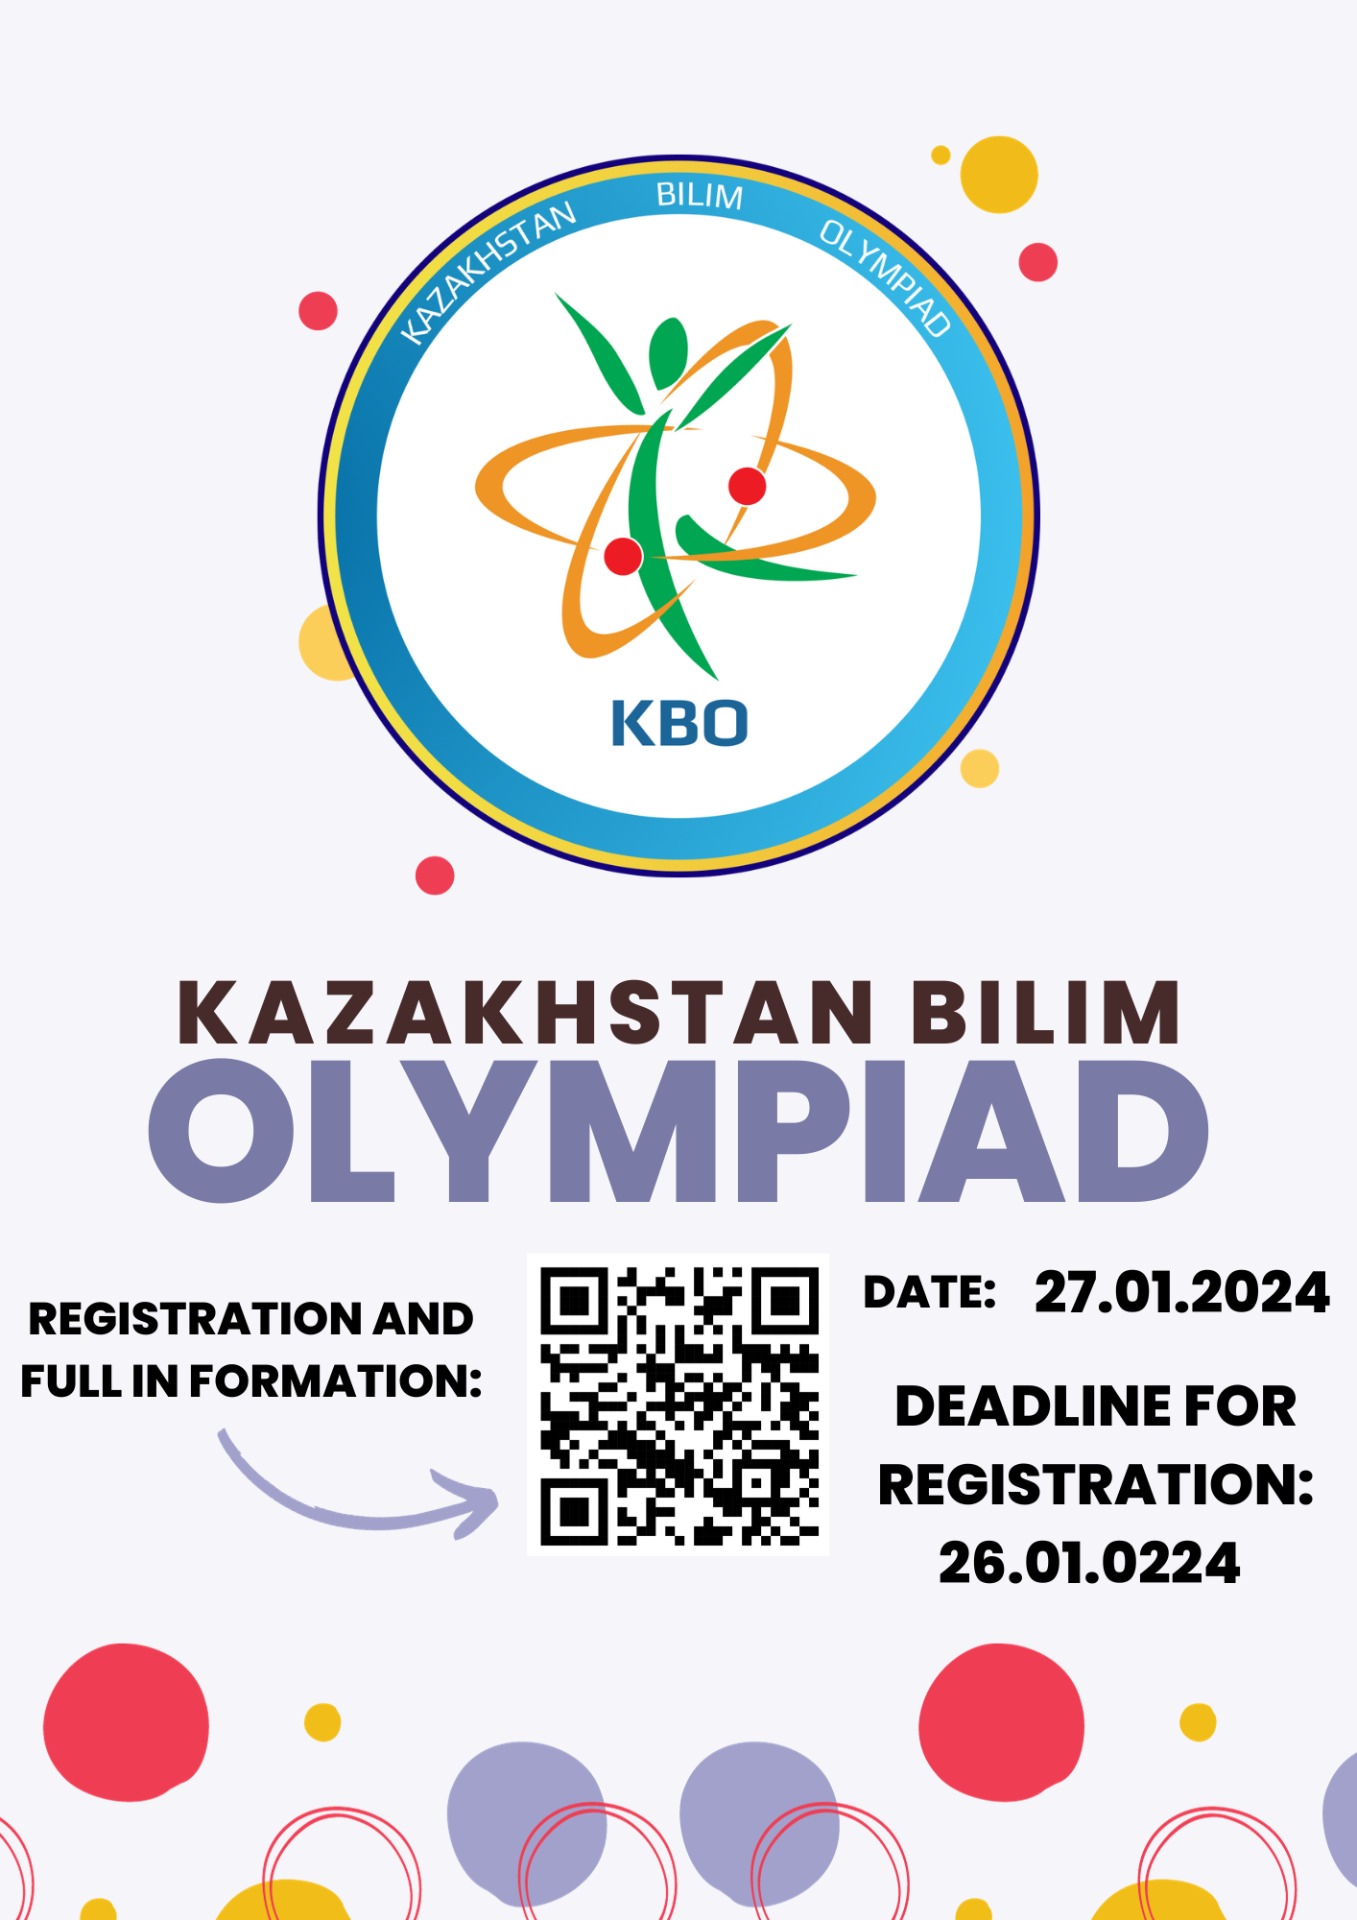 KBO (Kazakhstan Bilim Olimpiad) - Image 1